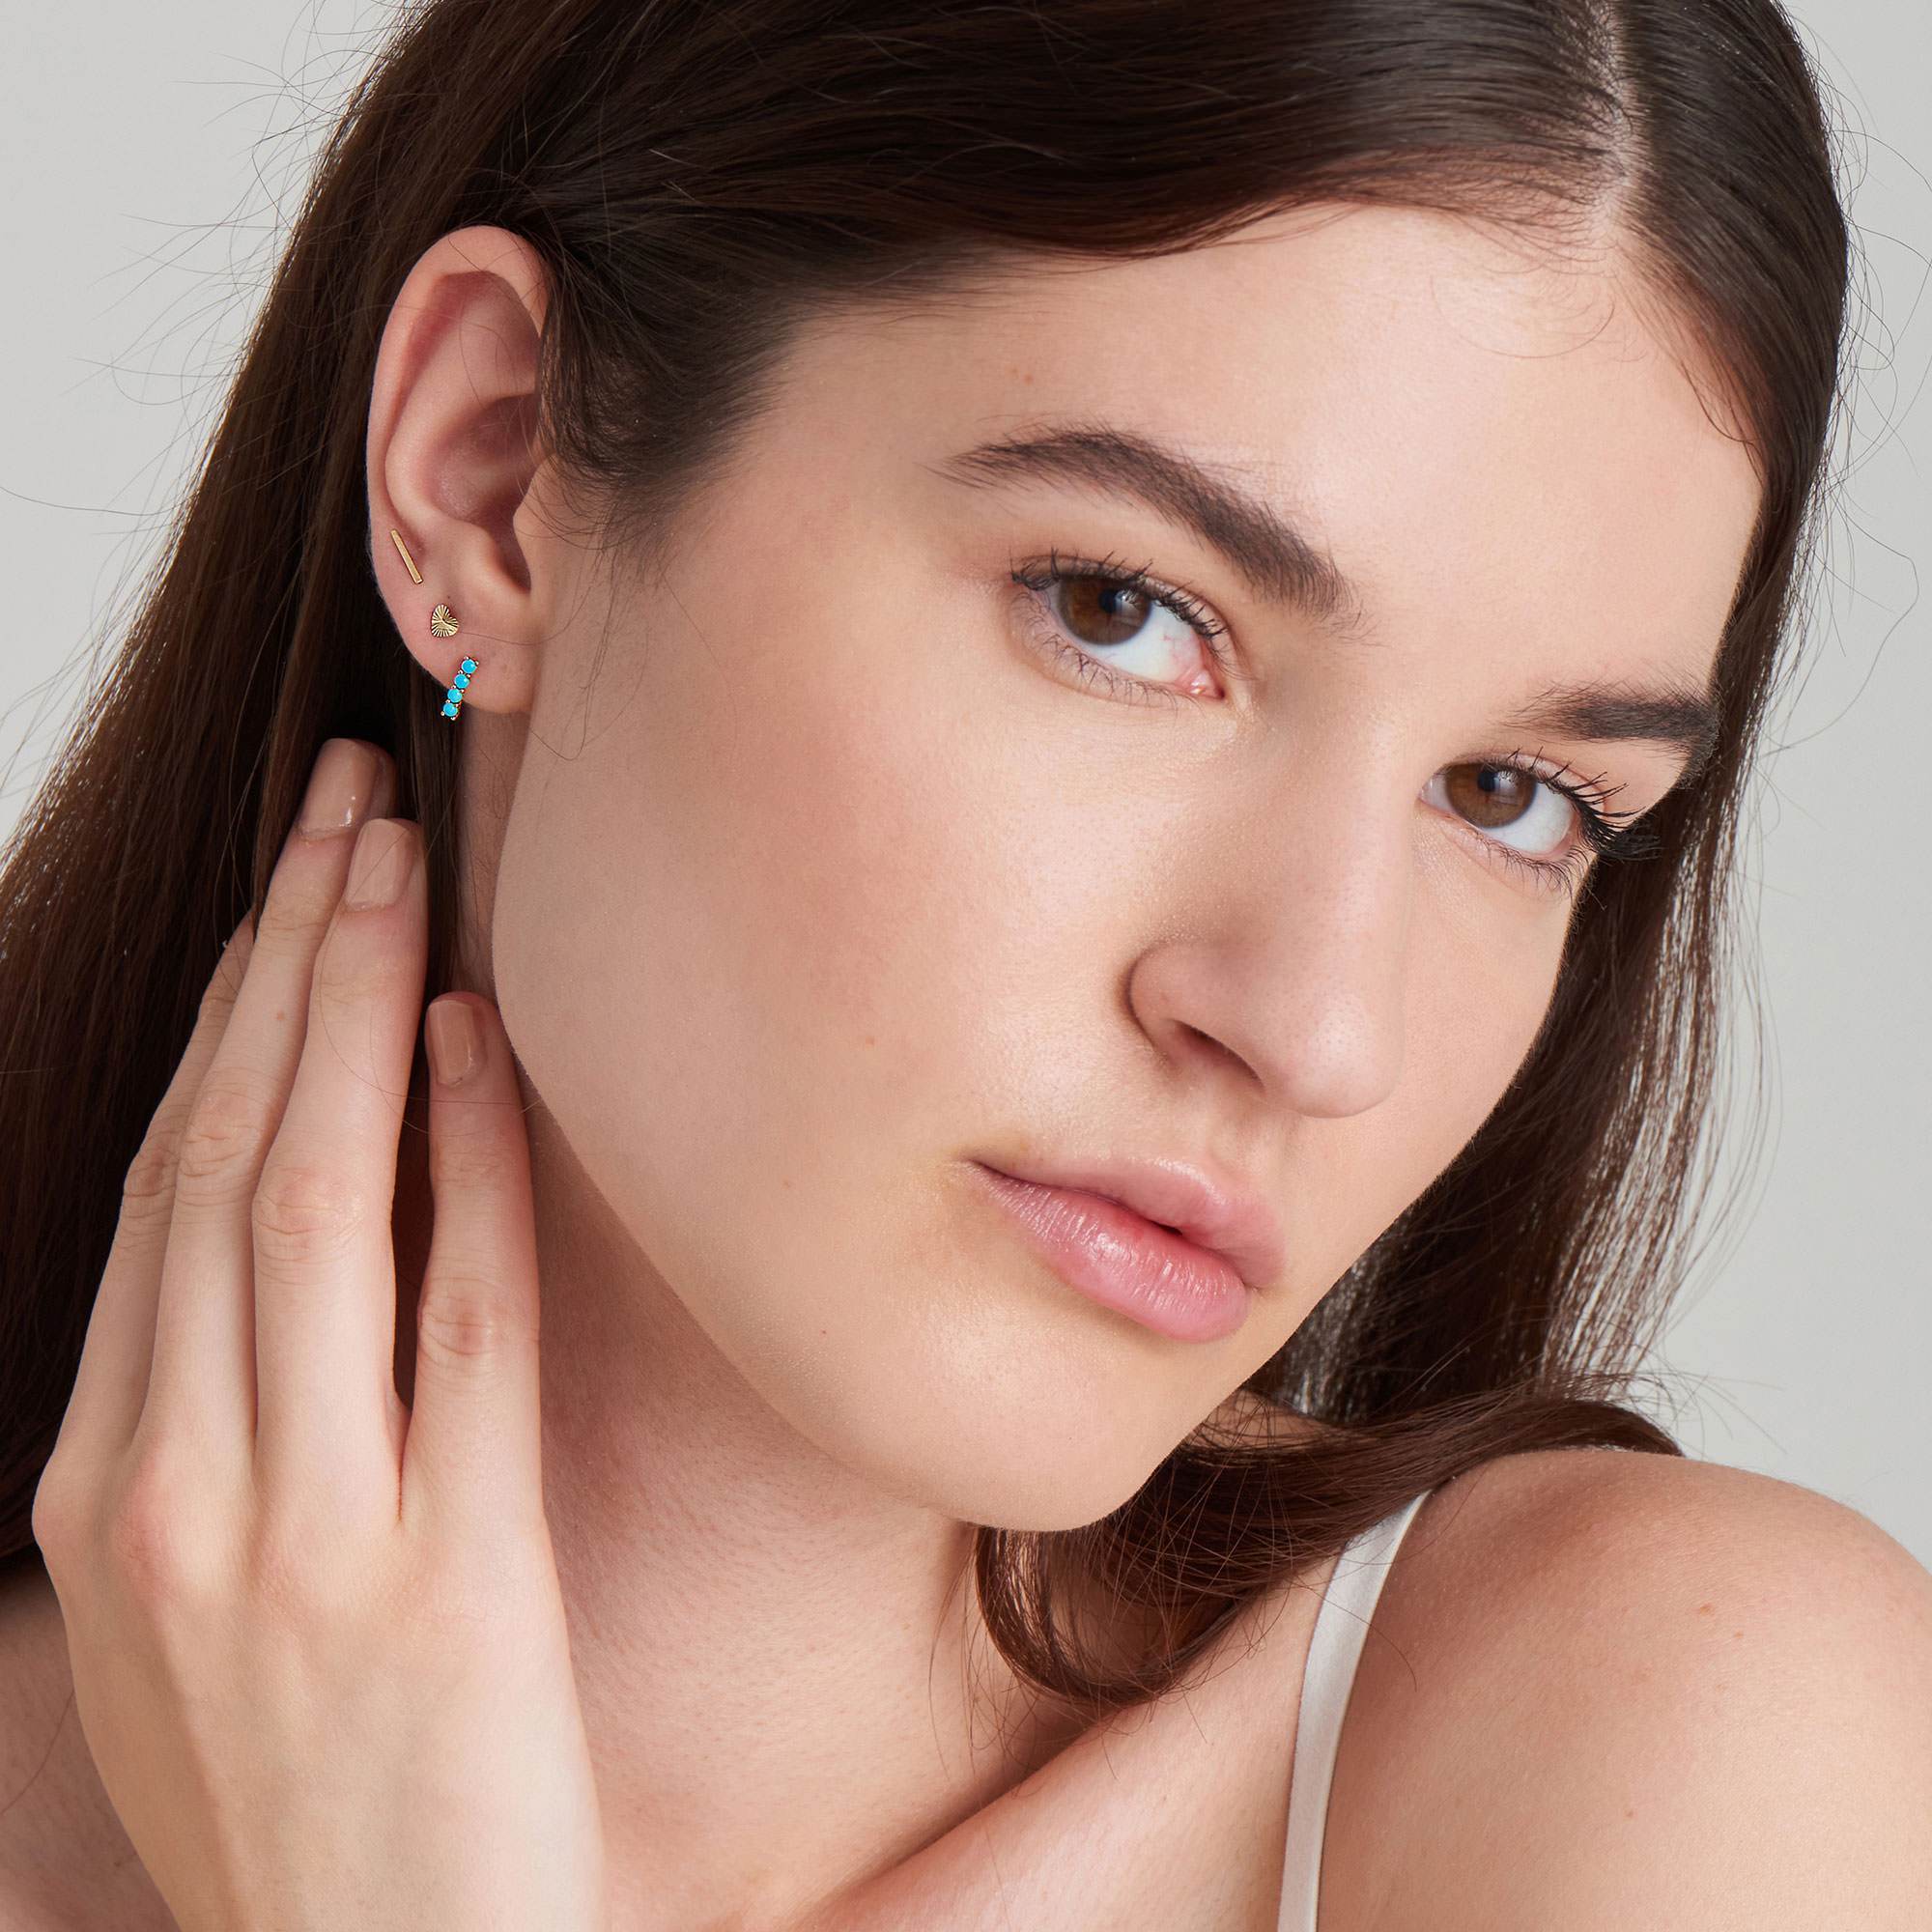 Ania Haie 14ct Gold Heart Stud Earrings